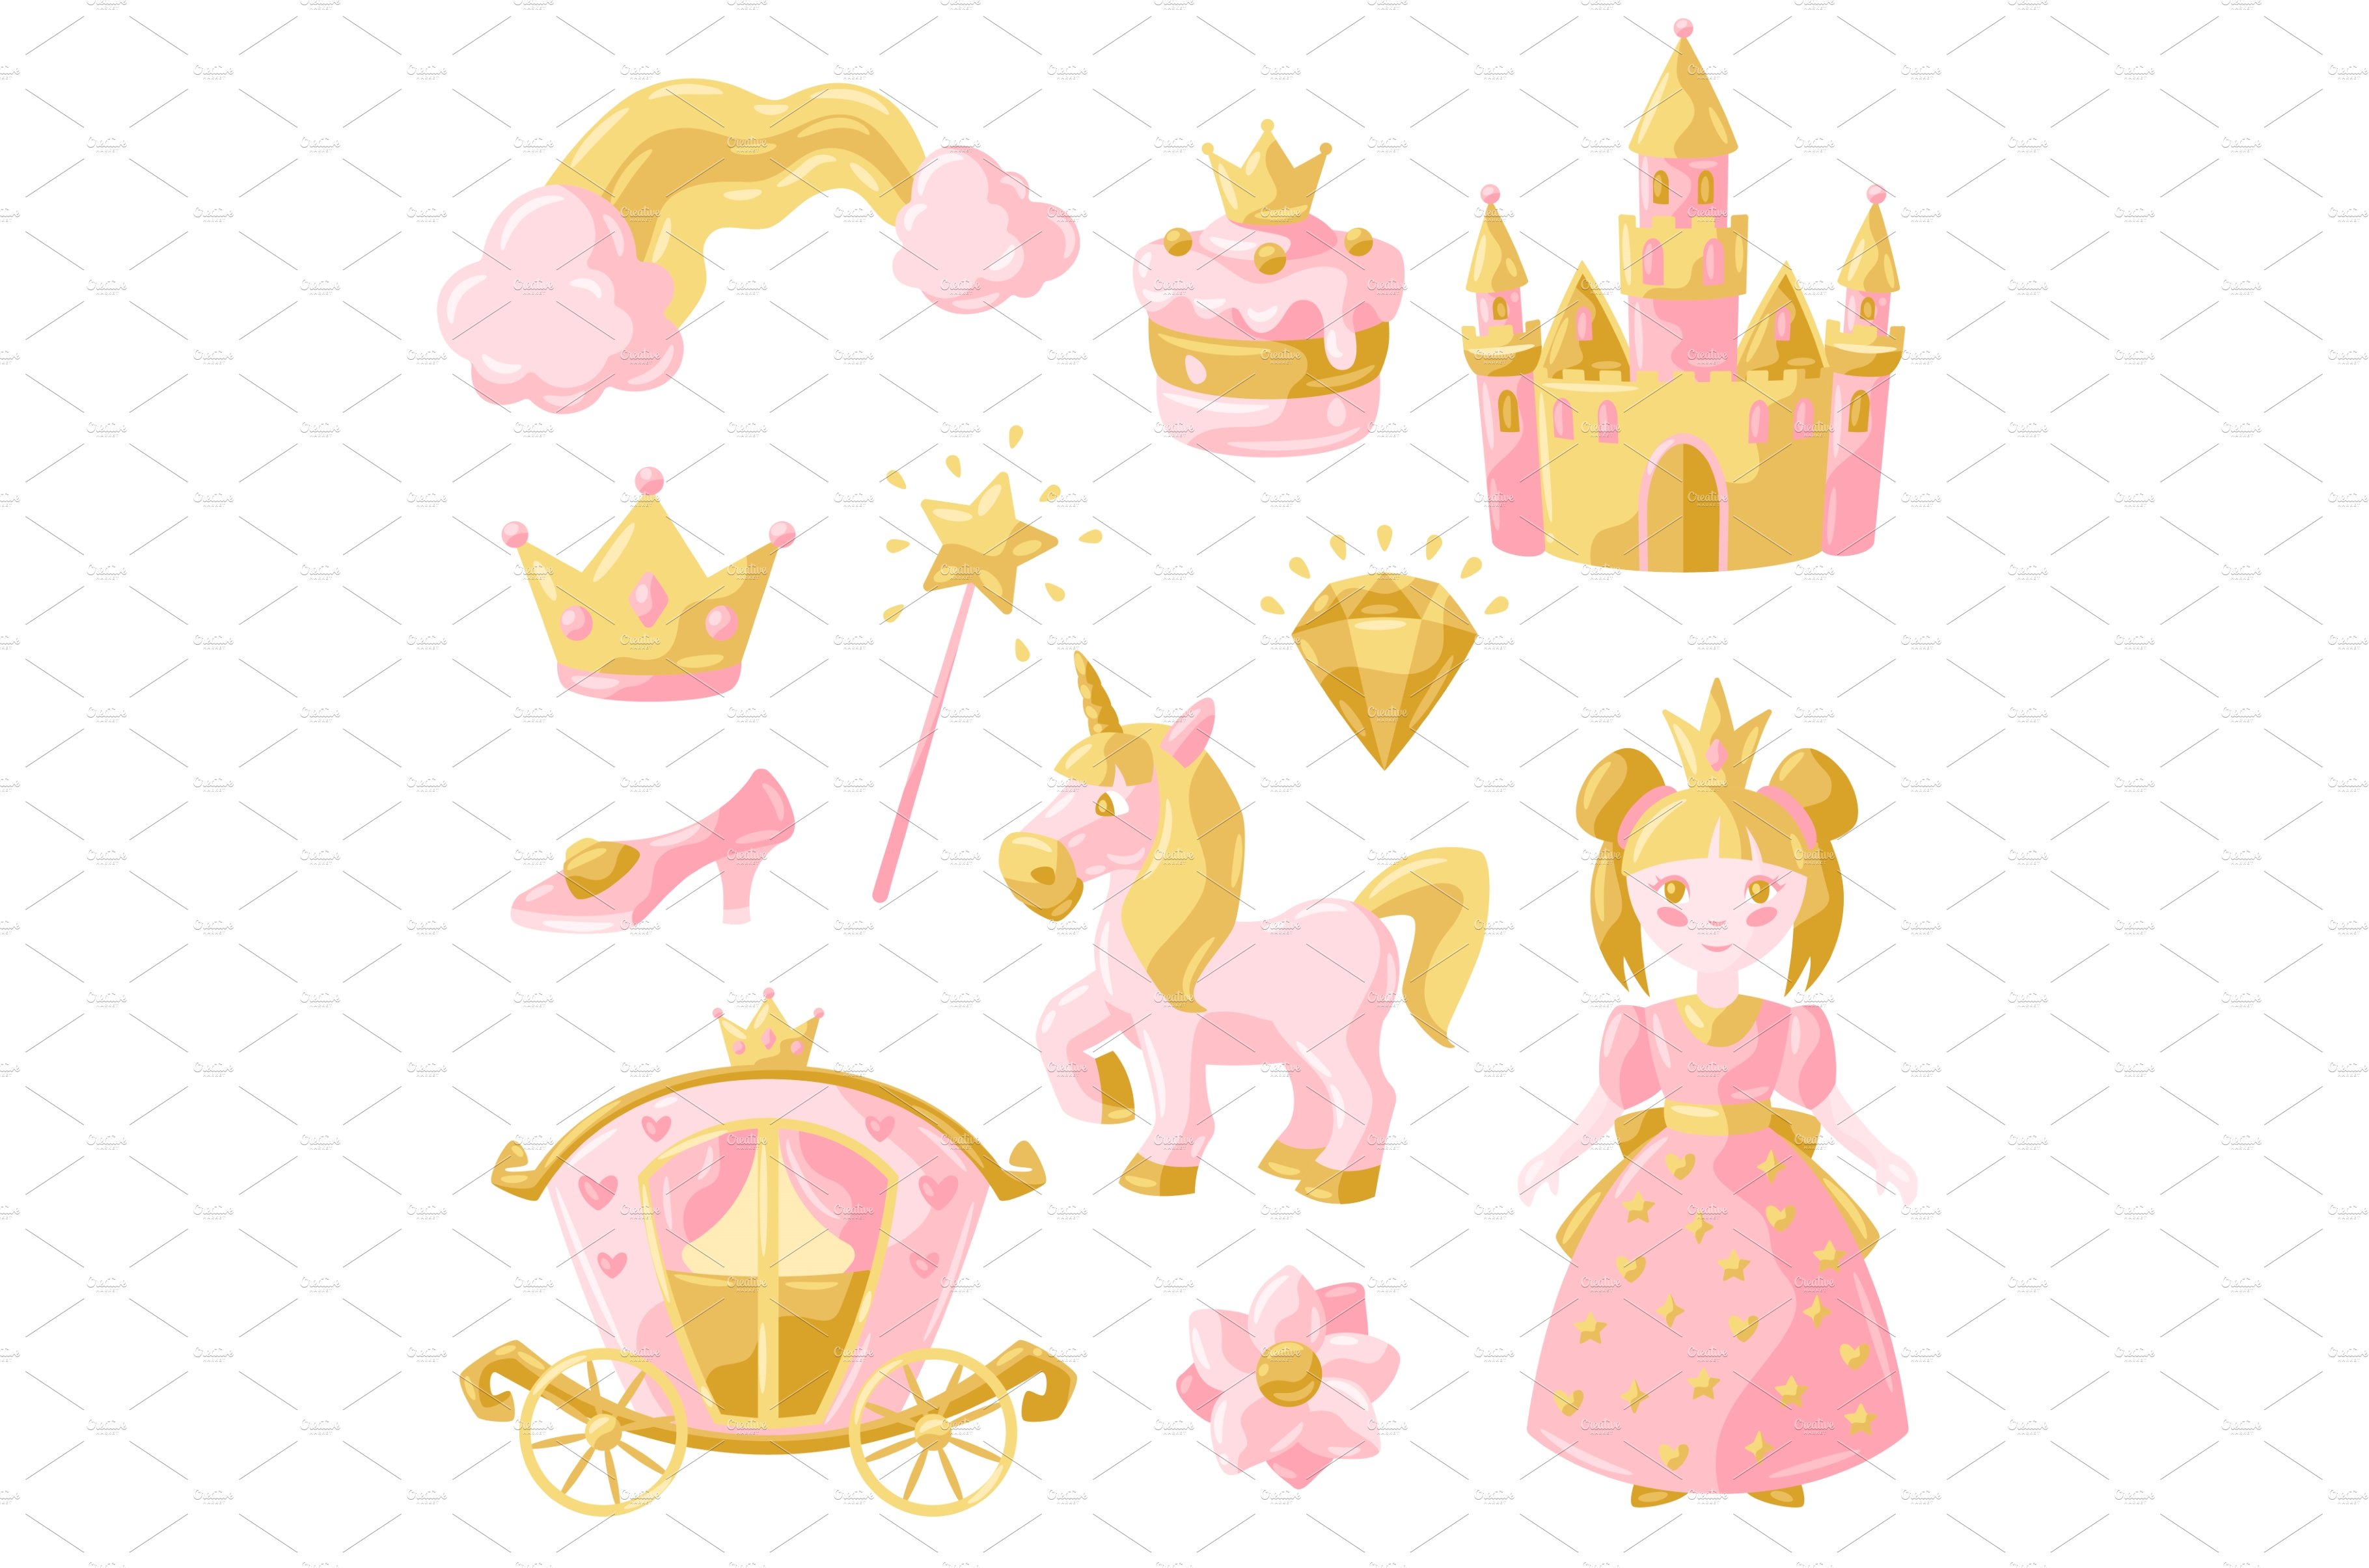 Princess party items set. cover image.